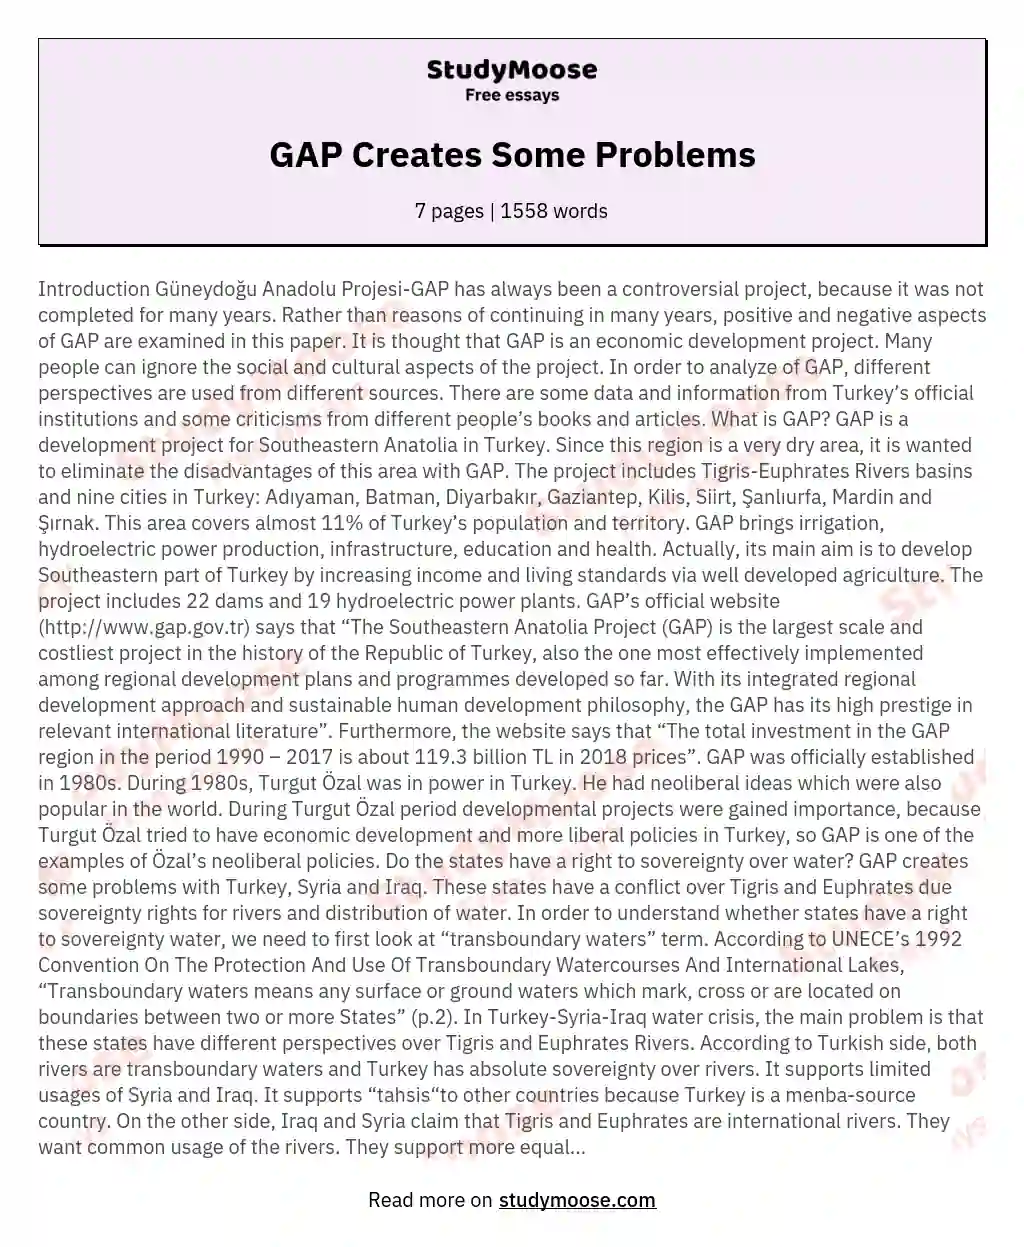 GAP Creates Some Problems essay